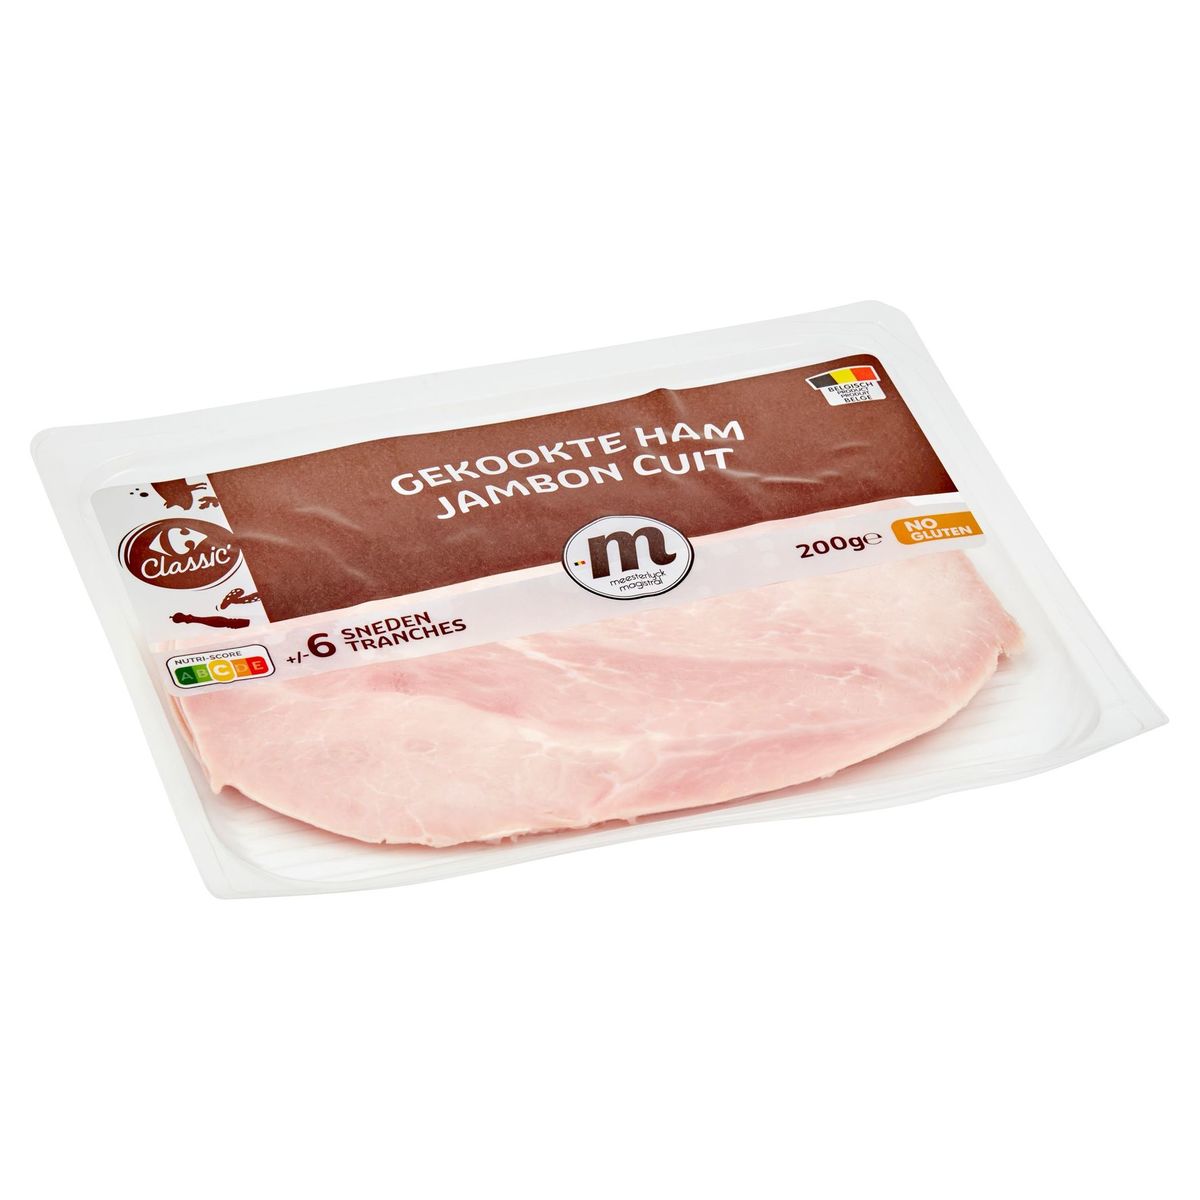 Carrefour Classic' Gekookte Ham 6 Sneden 200 g